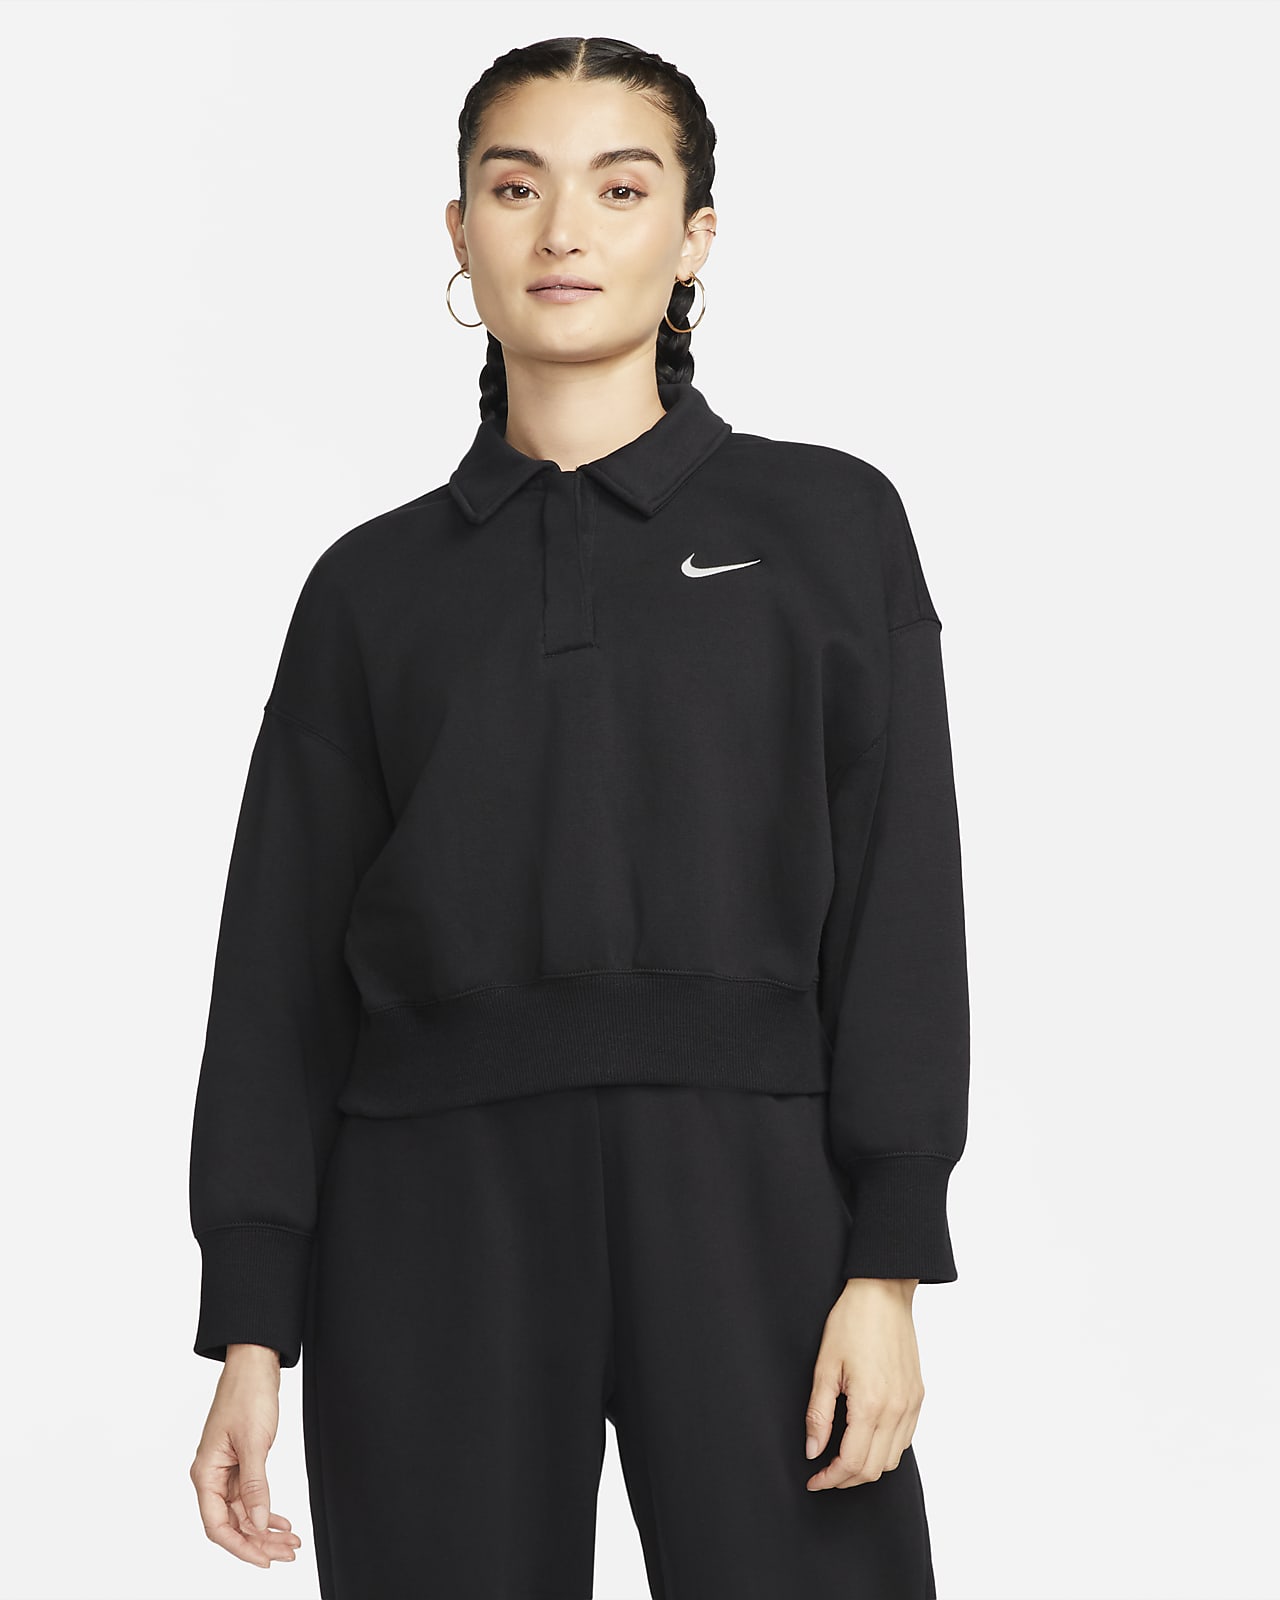 Kort Nike Sportswear Phoenix Fleece-polosweatshirt med 3/4-ærmer til kvinder